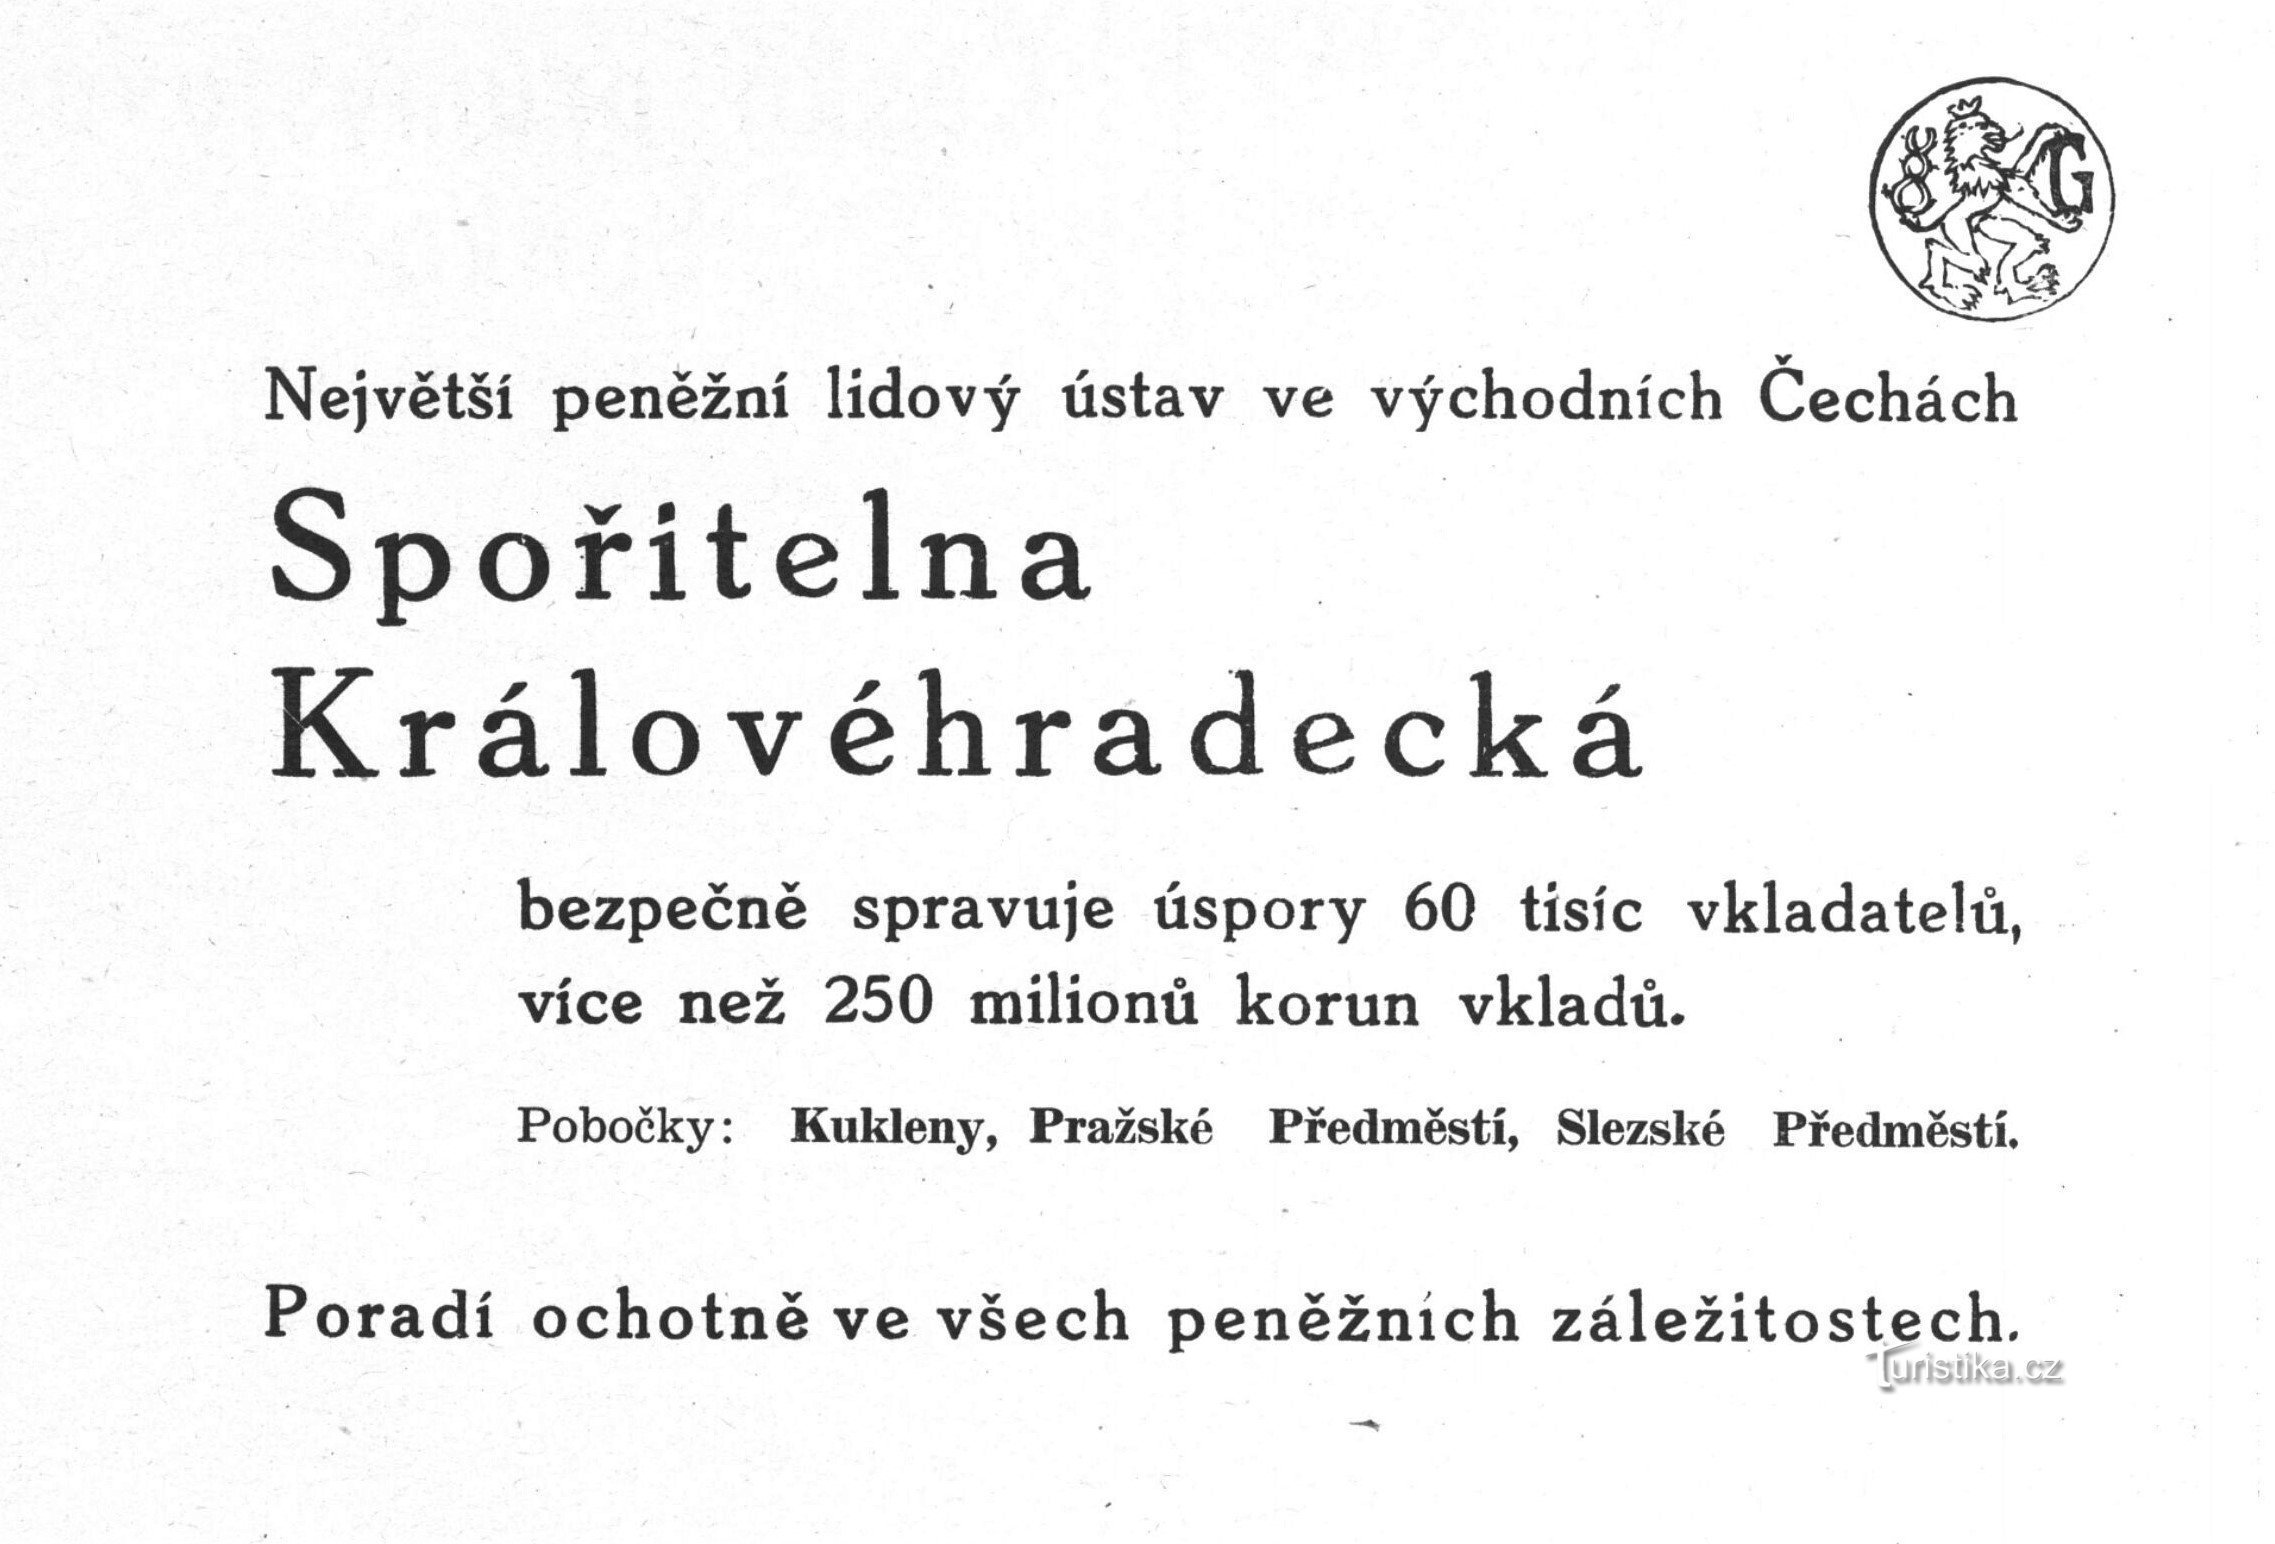 Werbung der Spořitelna Královéhradecké aus dem Jahr 1941